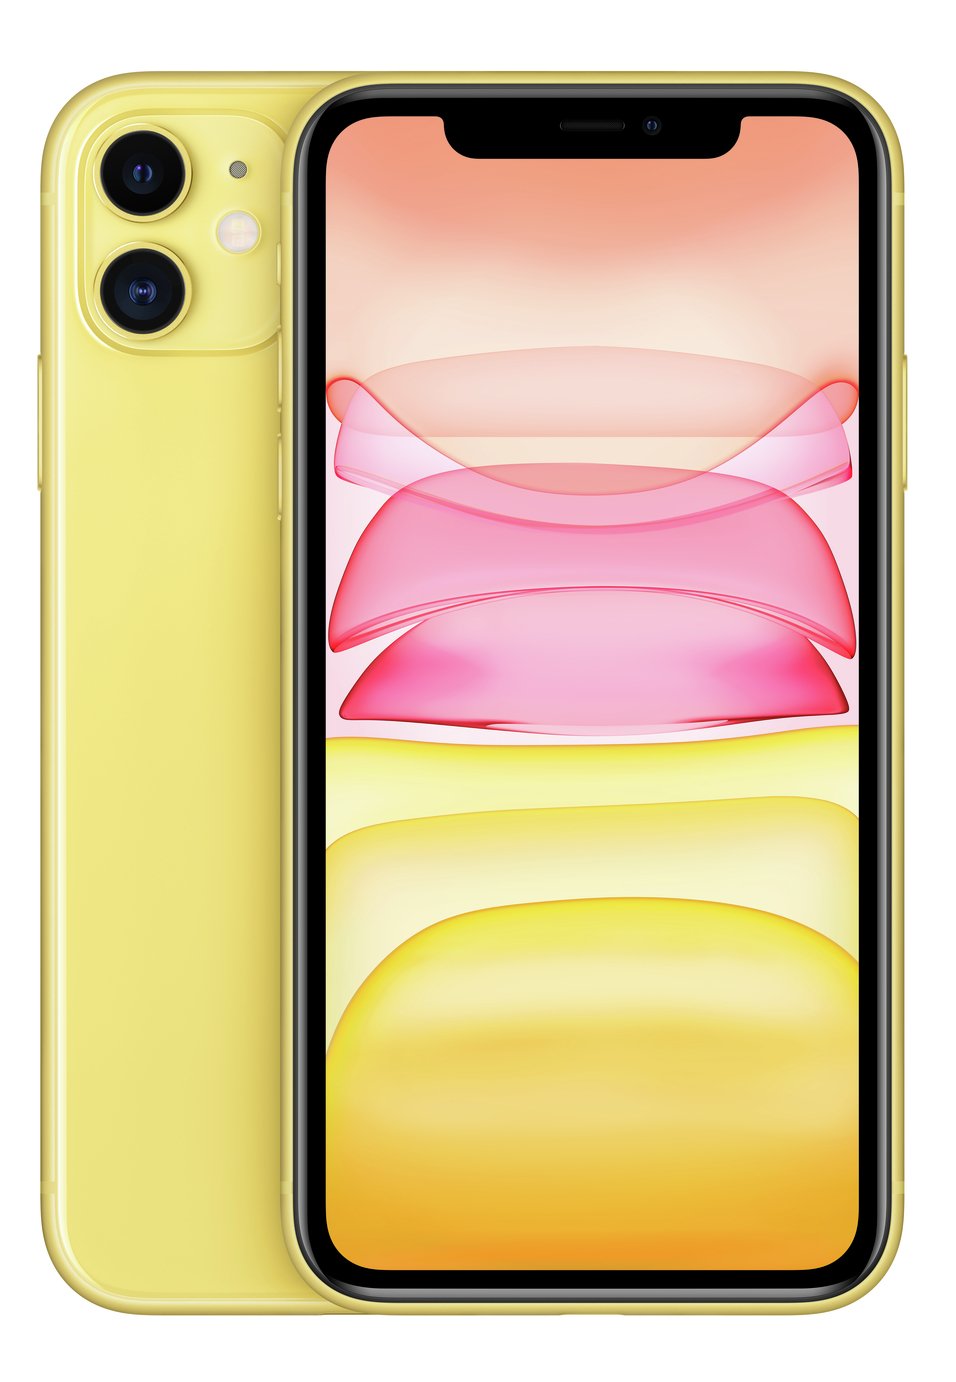 SIM Free iPhone 11 128GB Mobile Phone - Yellow